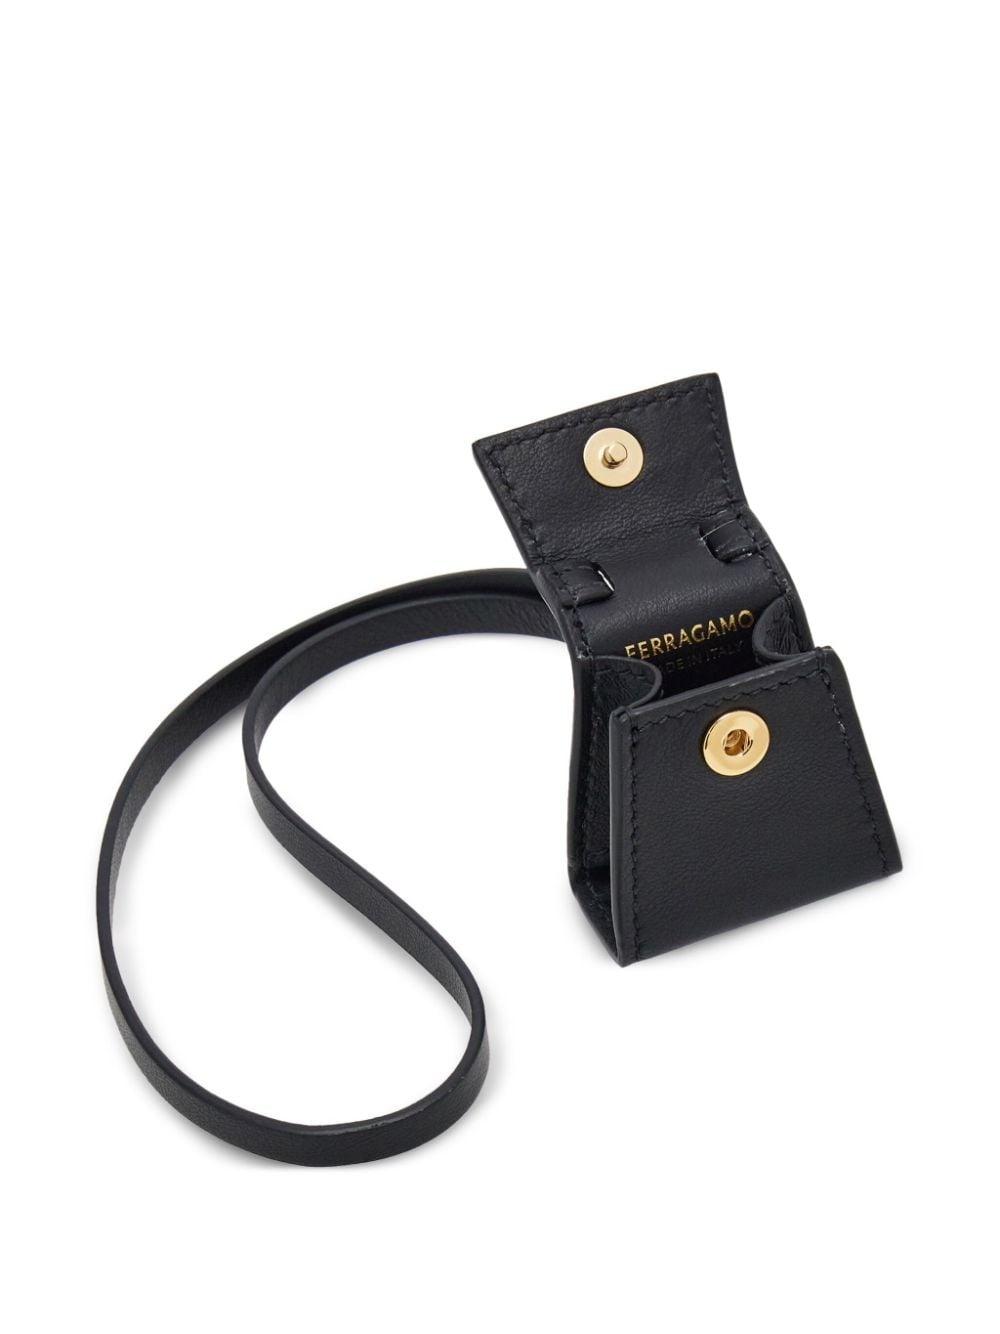 Gancini plaque leather purse - 3